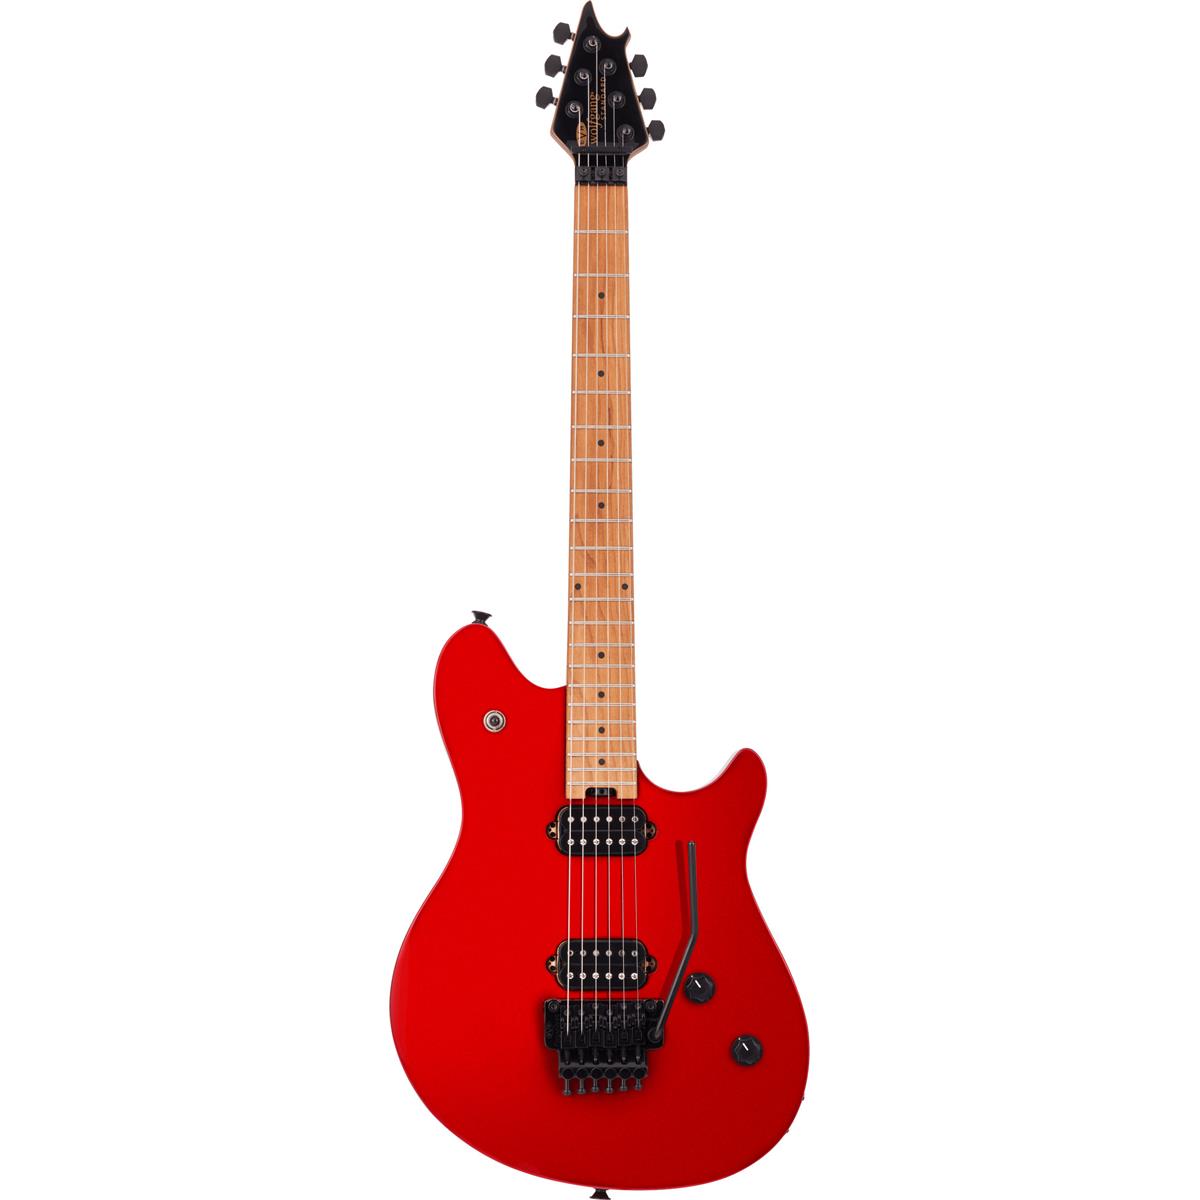 Evh wolfgang standard guitar silver sparkle & red model sale $479